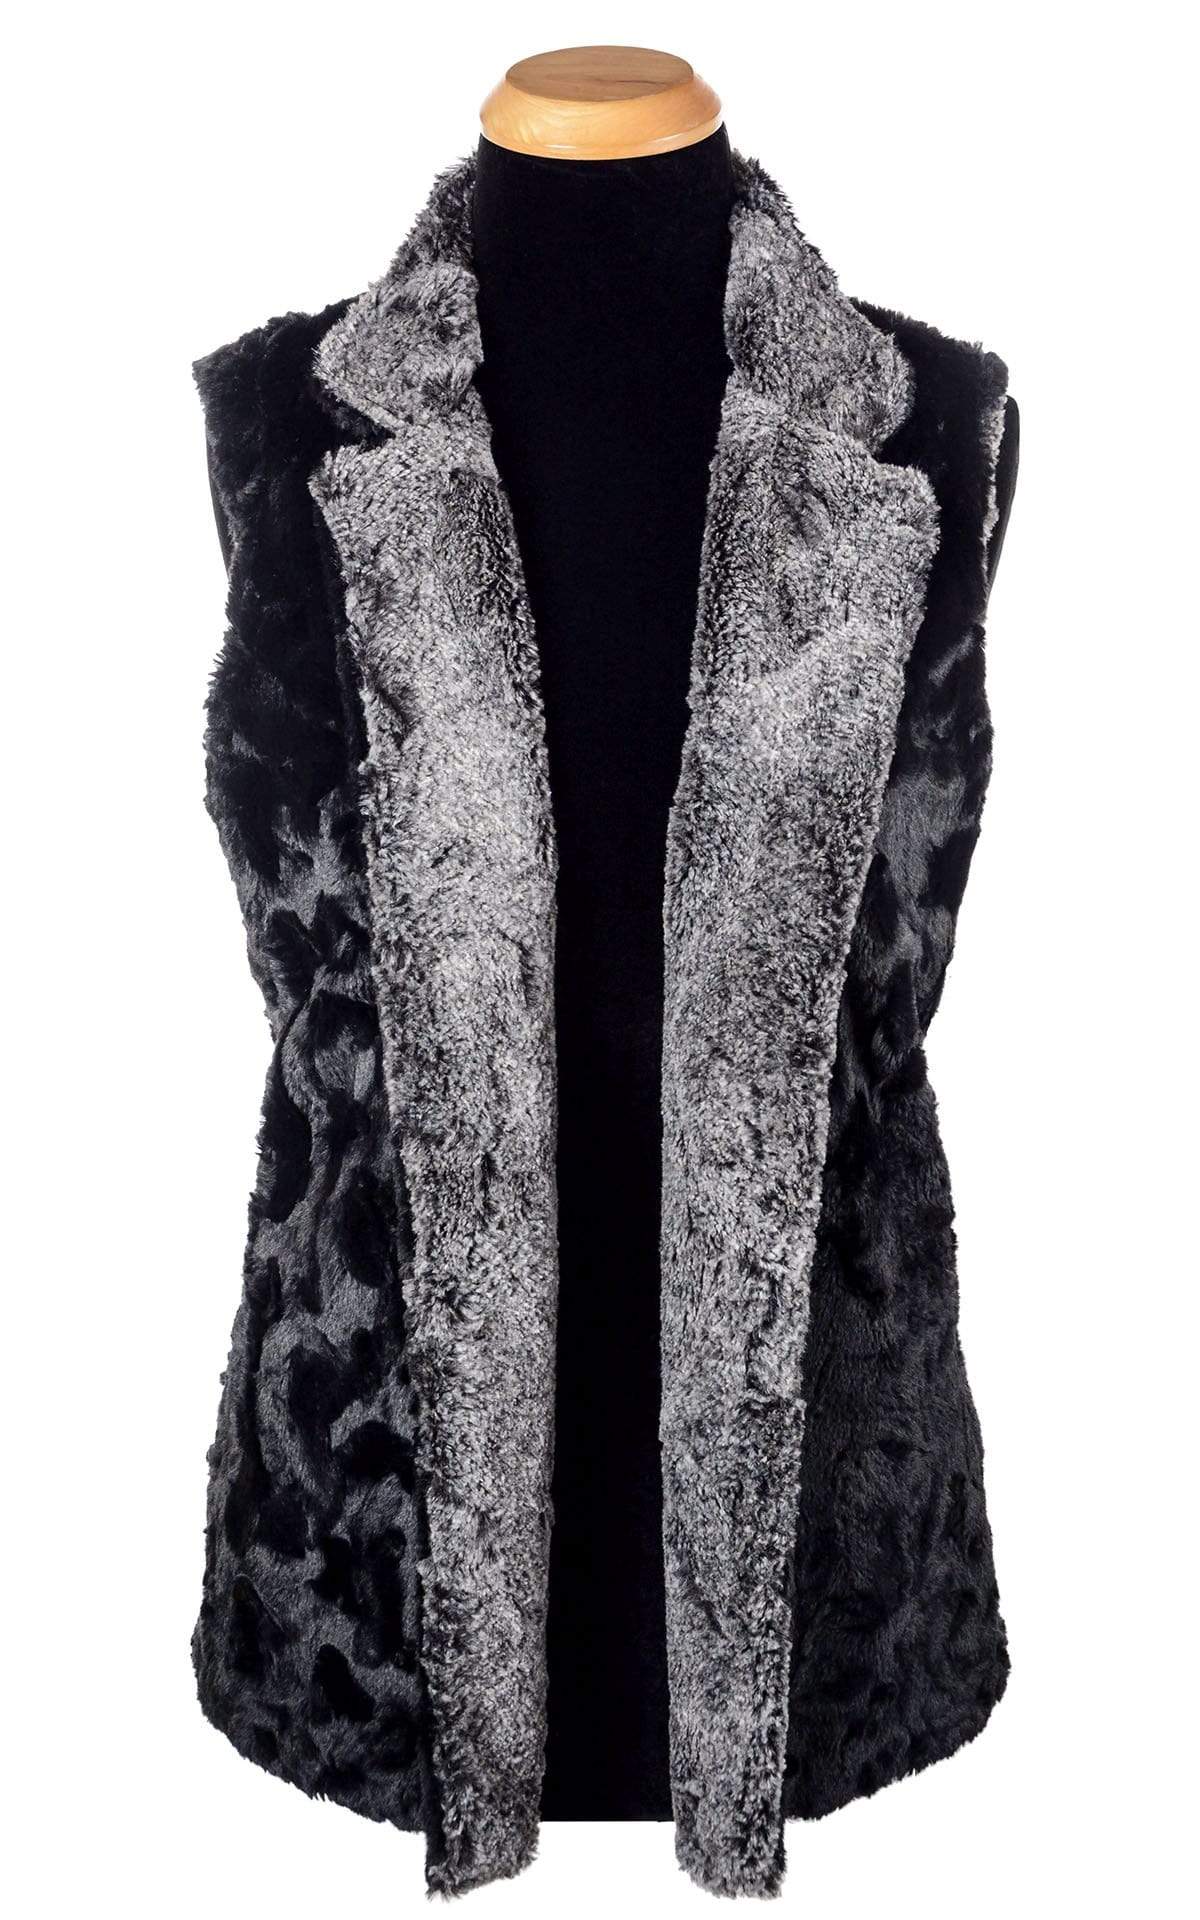 Mandarin Vest Short , Reversed | Nimbus Black and White Faux Fur and Cuddly Black Faux Fur | Handmade in Seattle WA | Pandemonium Milliner